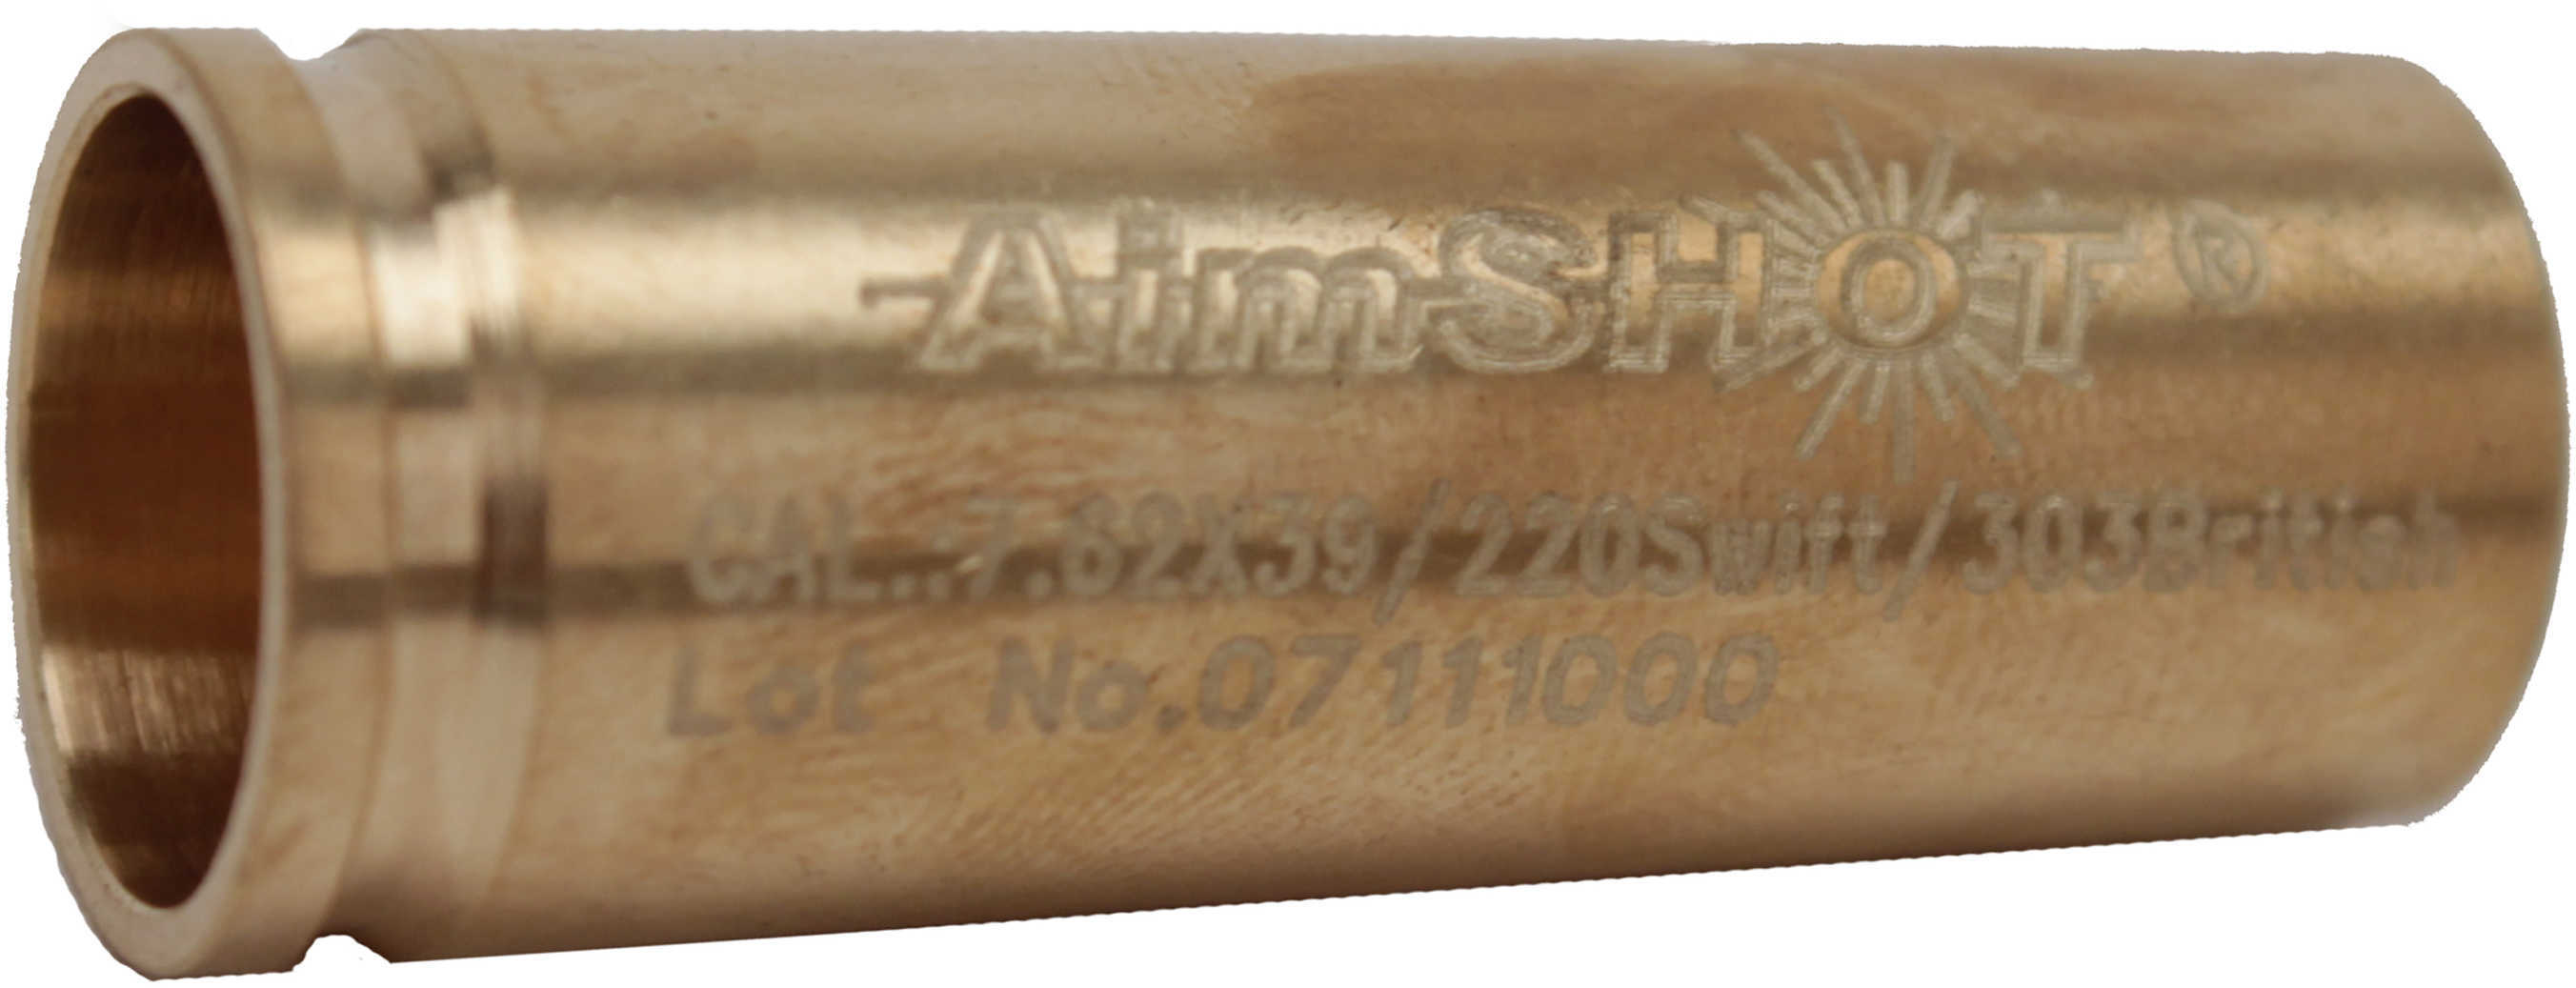 AimSHOT 7.62x39 Universal Laser Boresight Arbor